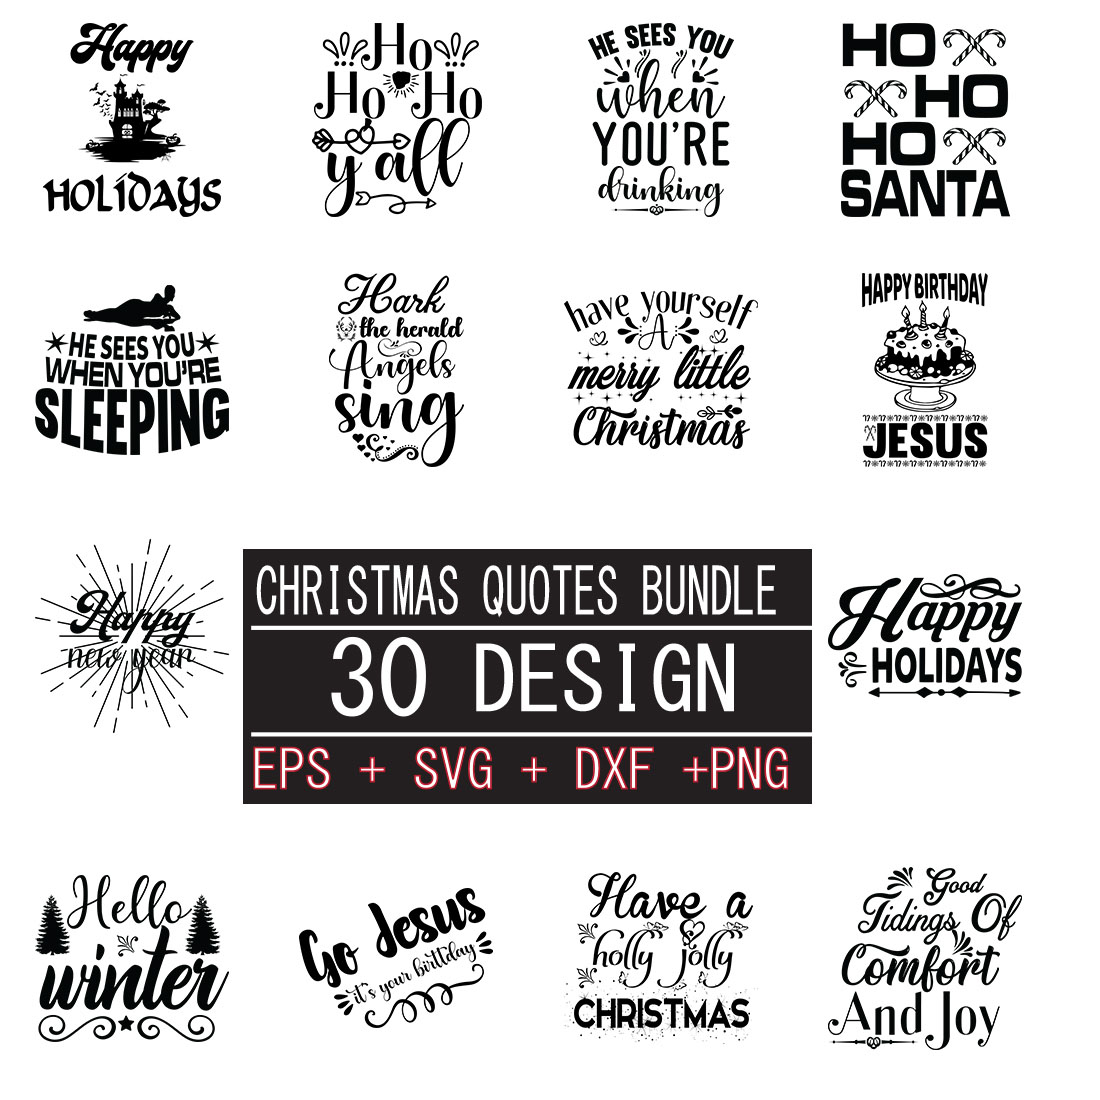 Christmas SVG bundle 30 design cover image.